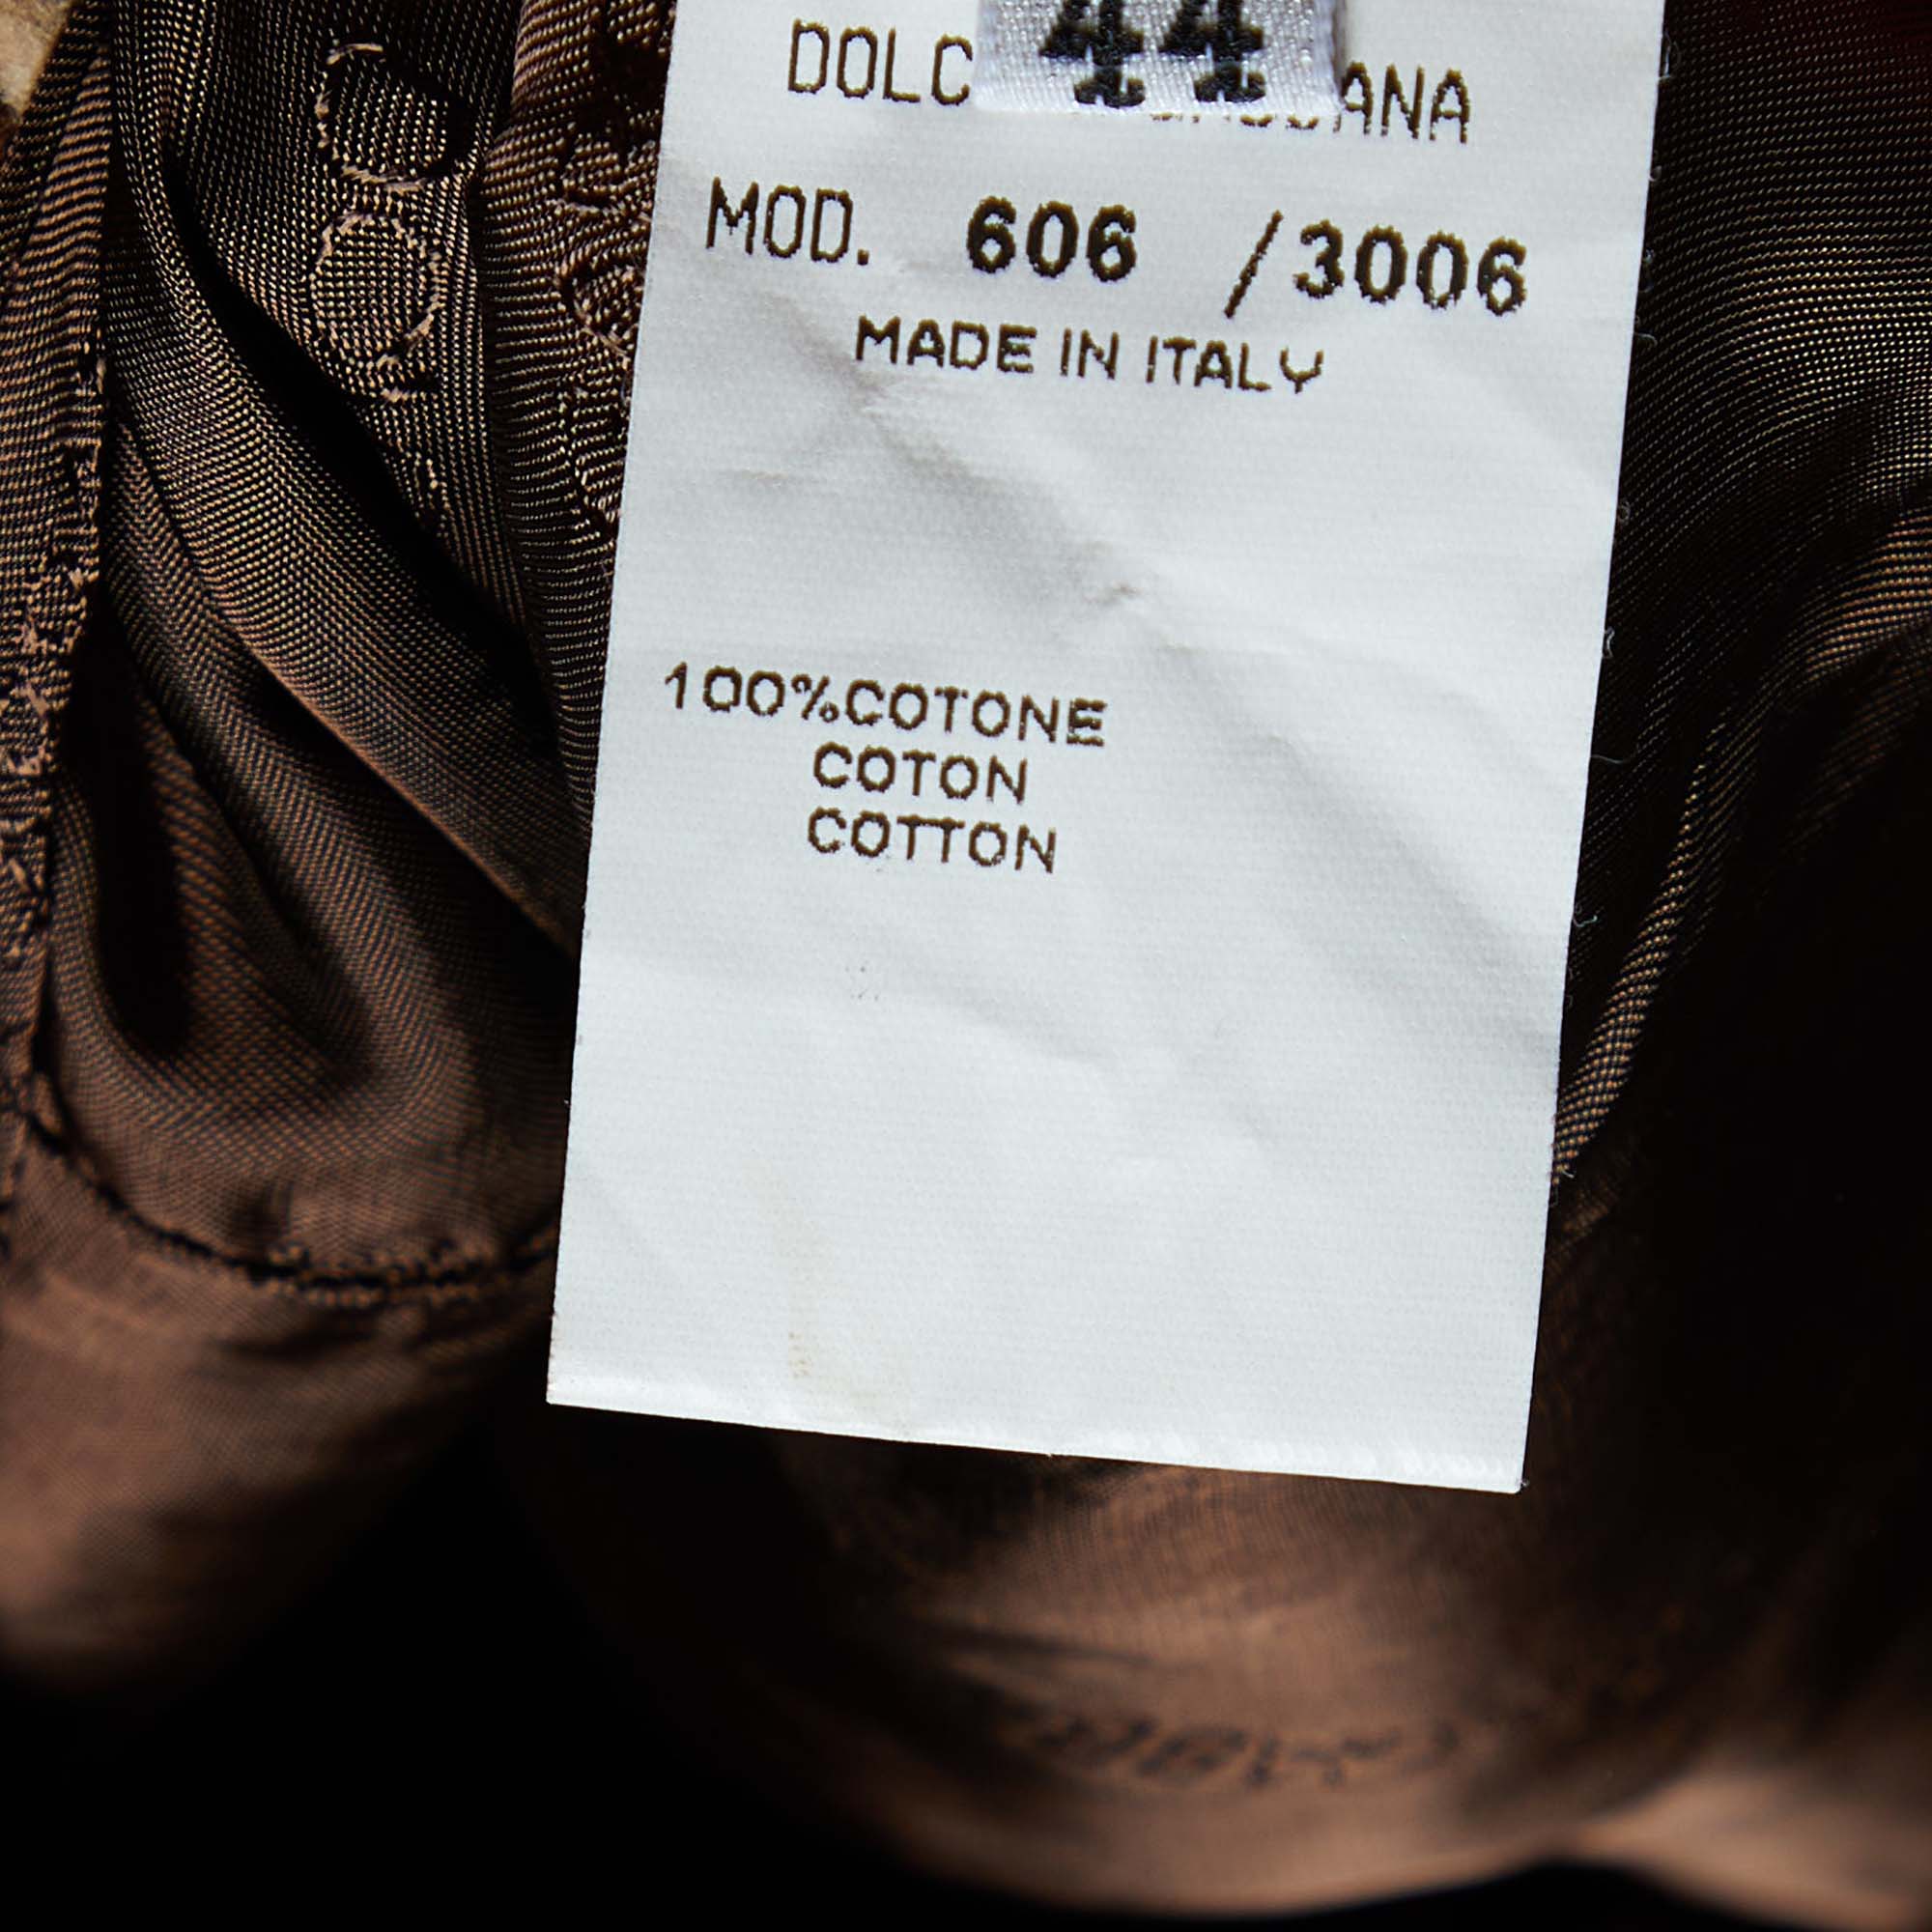 Dolce & Gabbana Brown Animal Printed Velvet Pants M